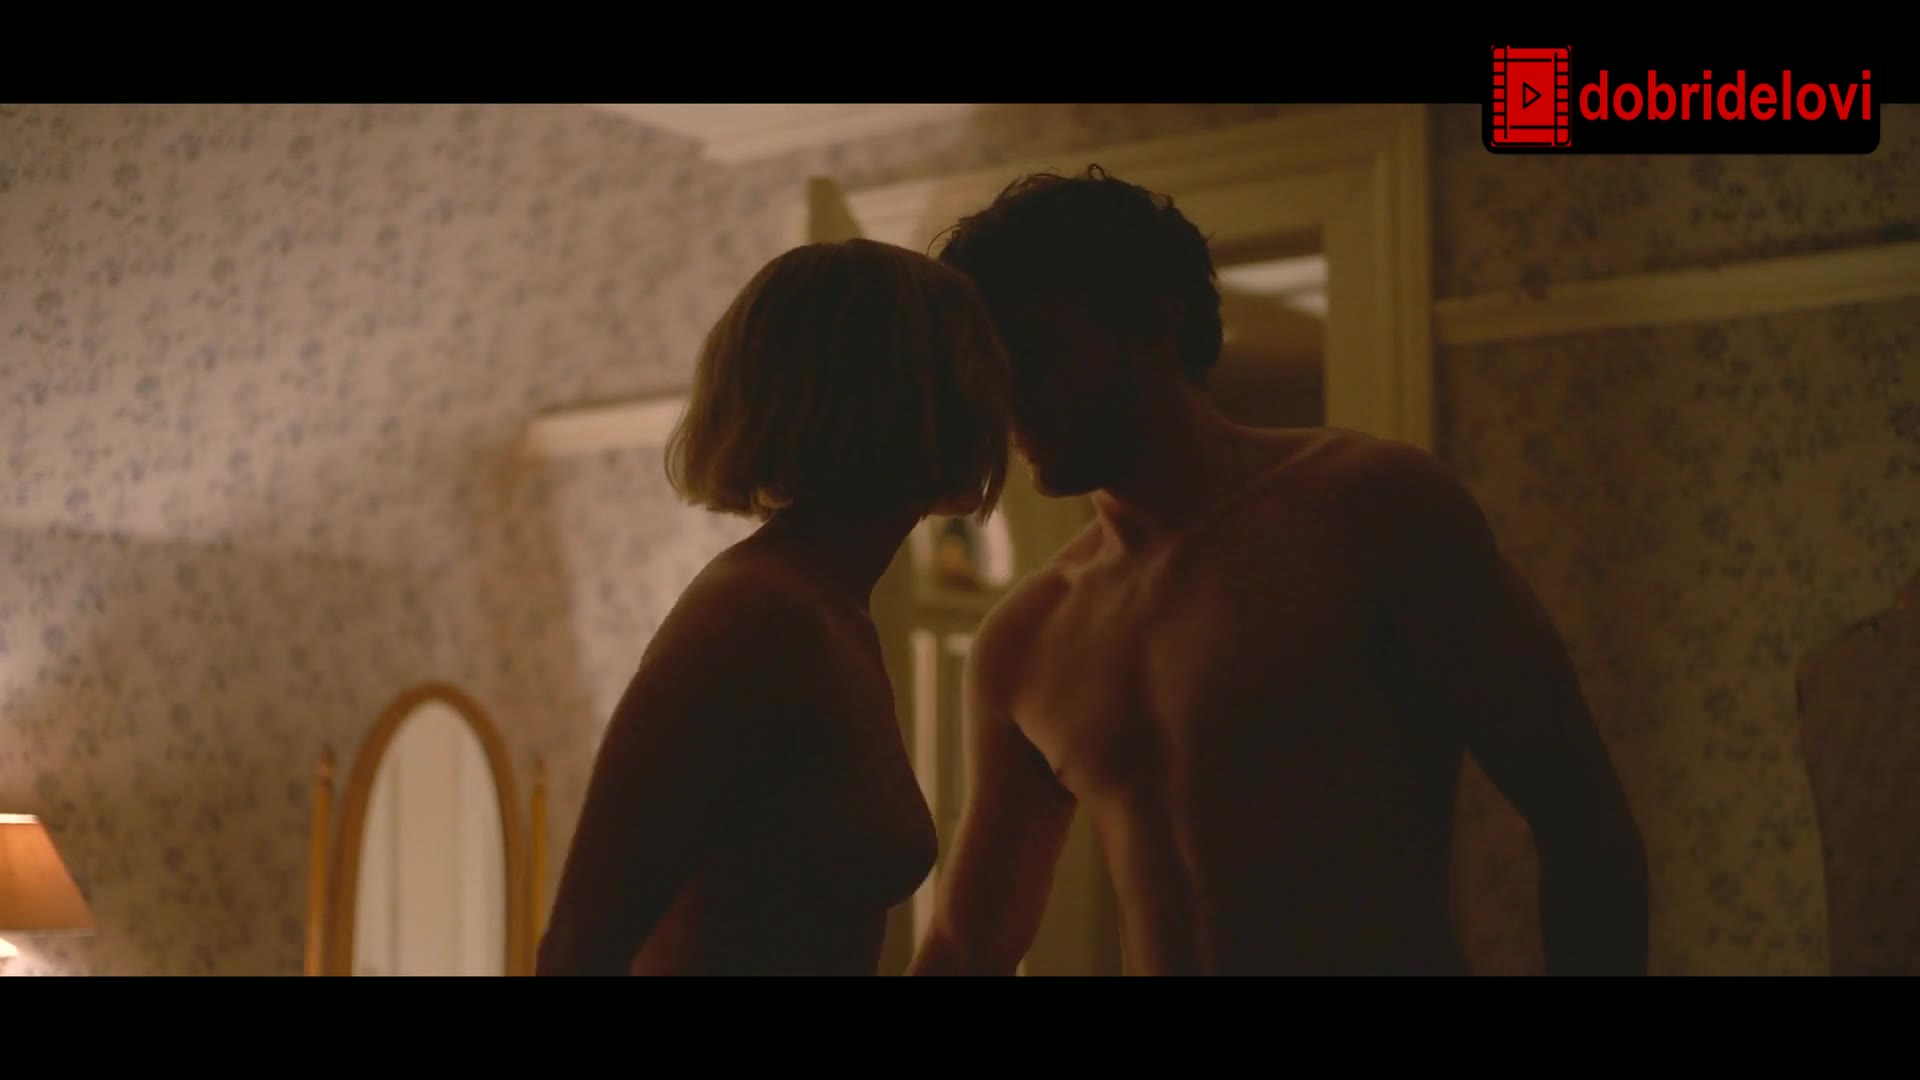 Saoirse Ronan nude scene from Foe